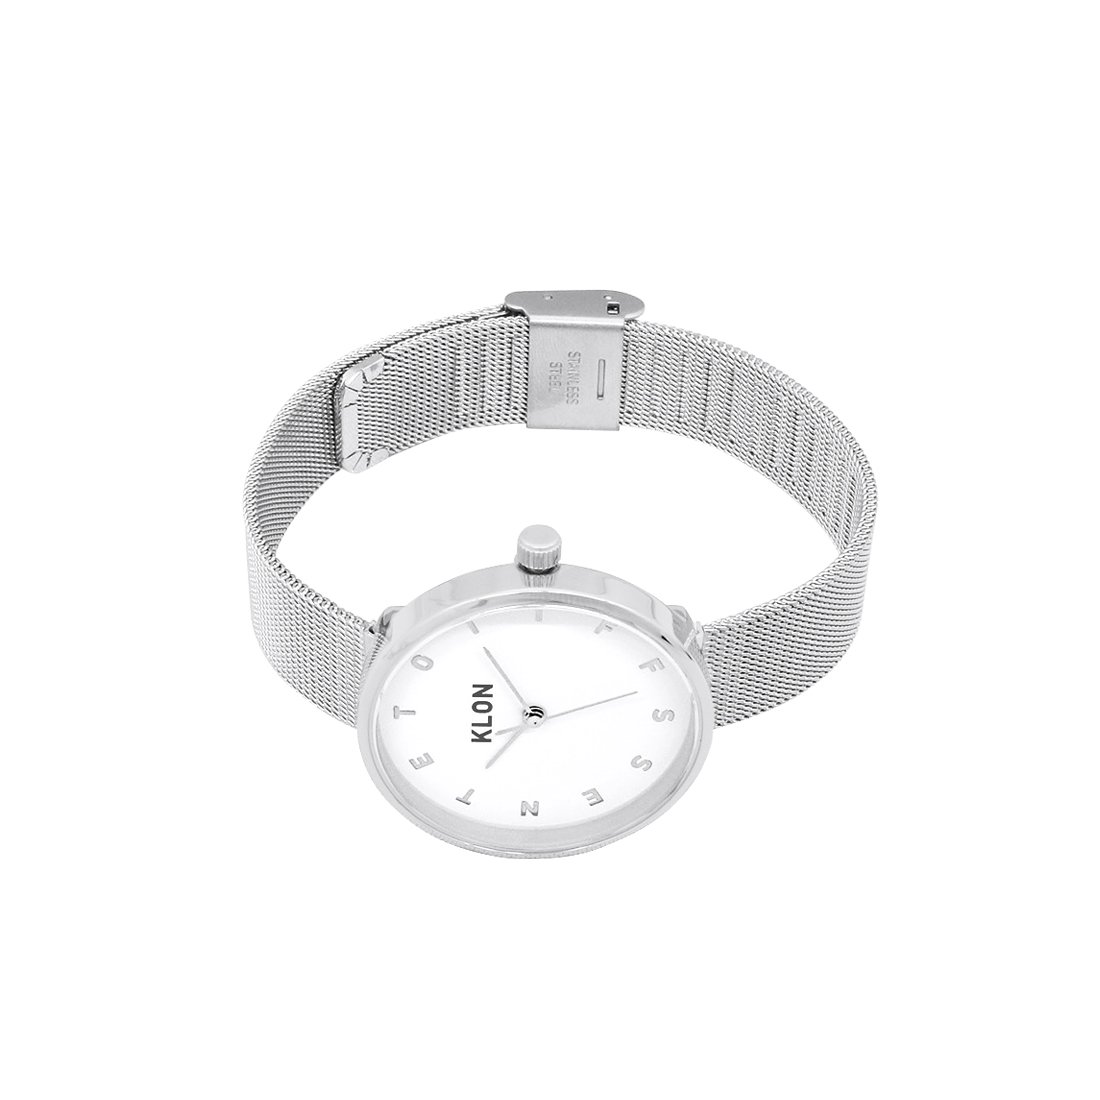 KLON ALPHABET TIME -SILVER MESH- Ver.SILVER 33mm カジュアル 腕時計